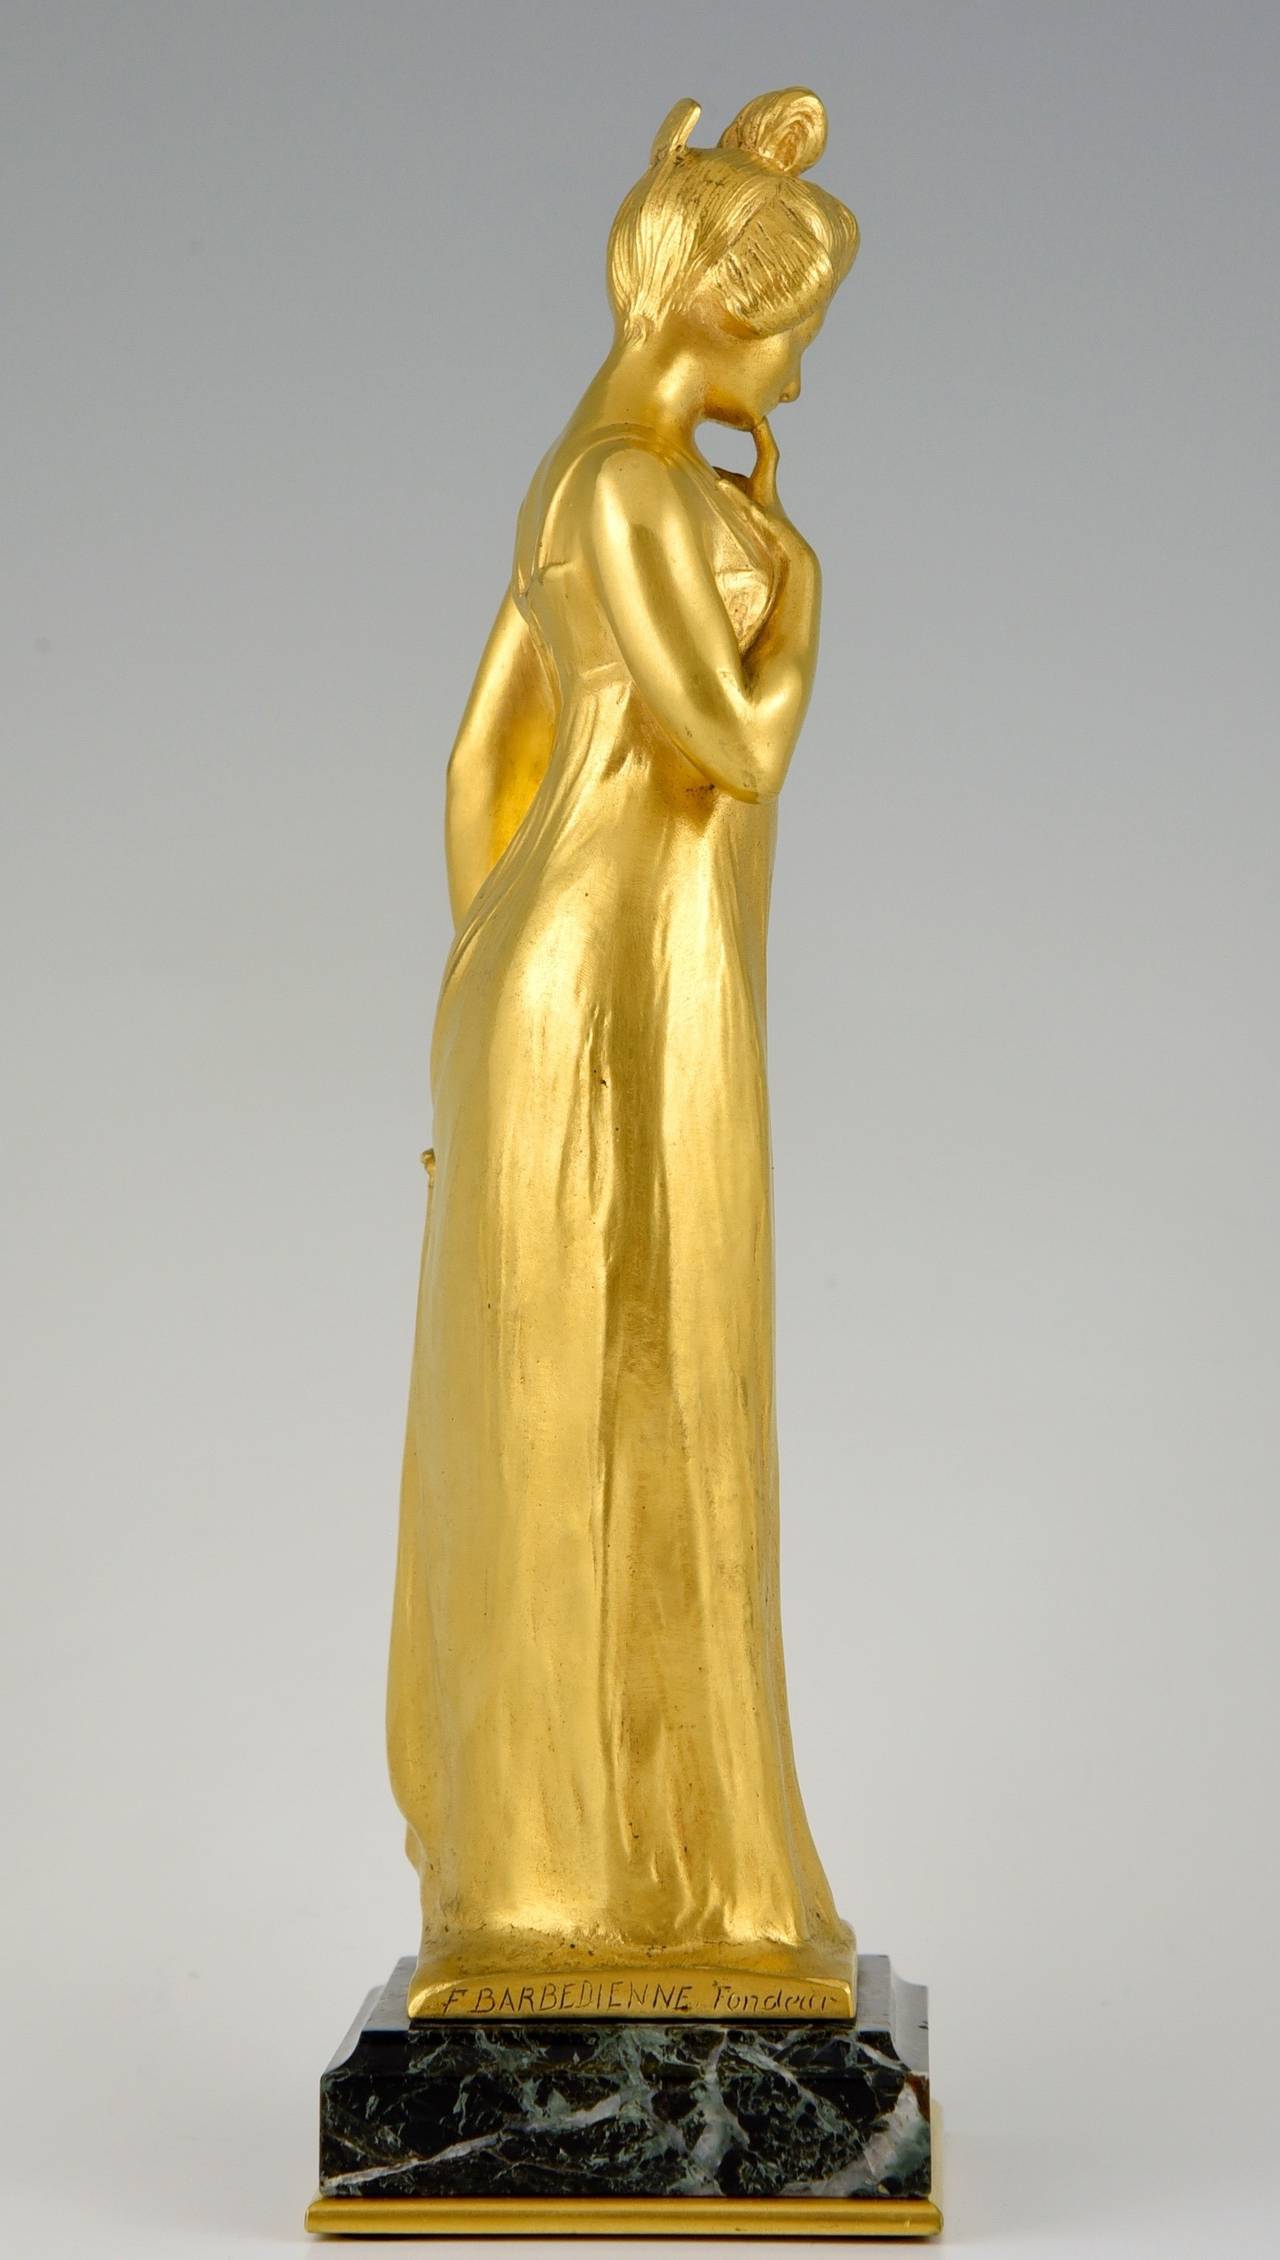 20th Century French Art Nouveau Gilt Bronze Sculpture of a Lady by Laporte-Blairsy, 1905